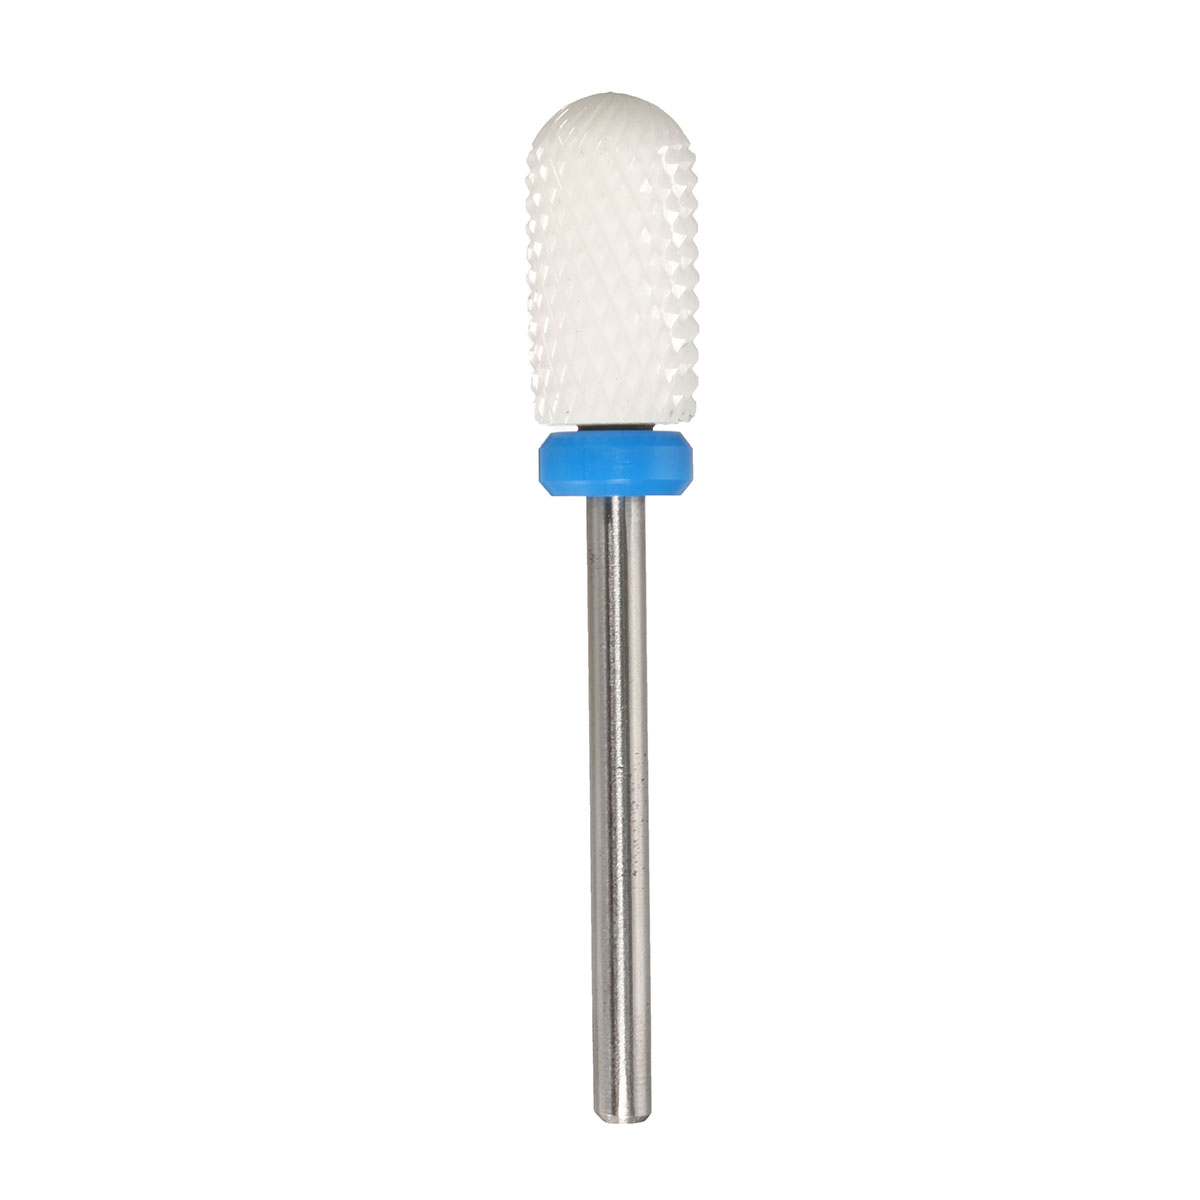 5pcs-Ceramic-Nail-Drill-Bit-Set-Smooth-Tapered-Brush-Rotary-File-Cuticle-Manicure-Pedicure-Salon-Kit-1129869-6